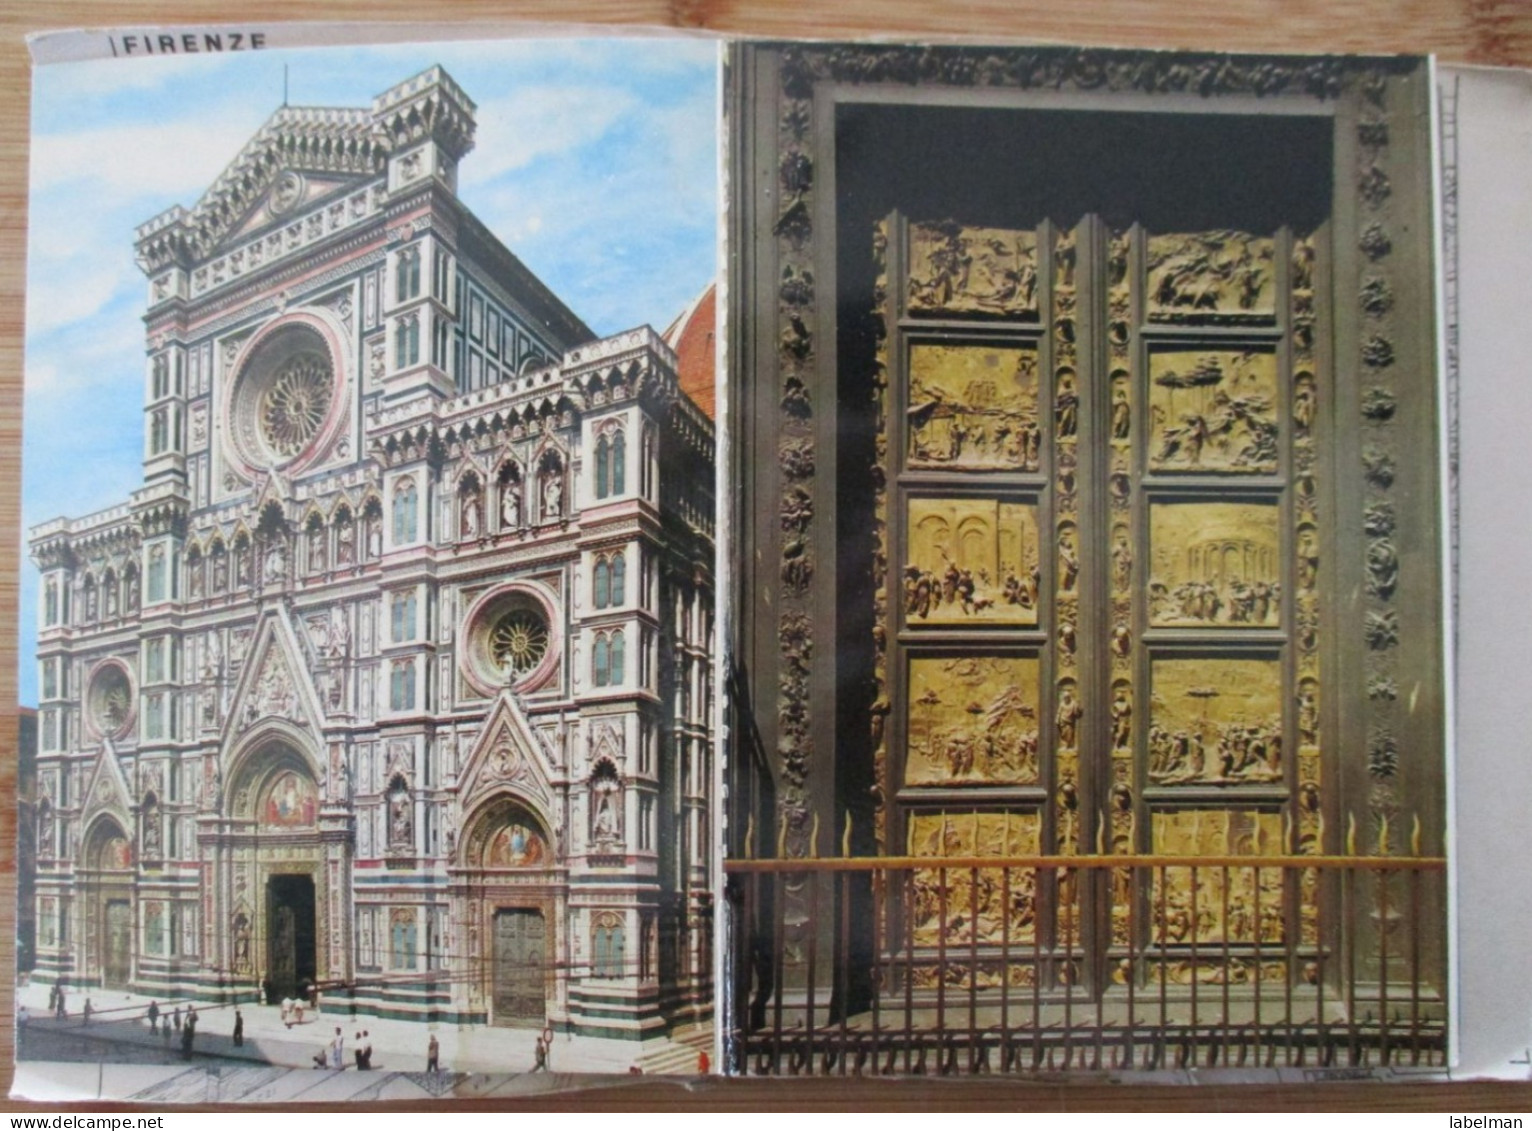 ITALY FIRENZE BOOKLET FOLDER SET BROCHURE MAP GUIDE KARTE CARD ANSICHTSKARTE POSTCARD CARTE POSTALE POSTKARTE PHOTO - Battipaglia